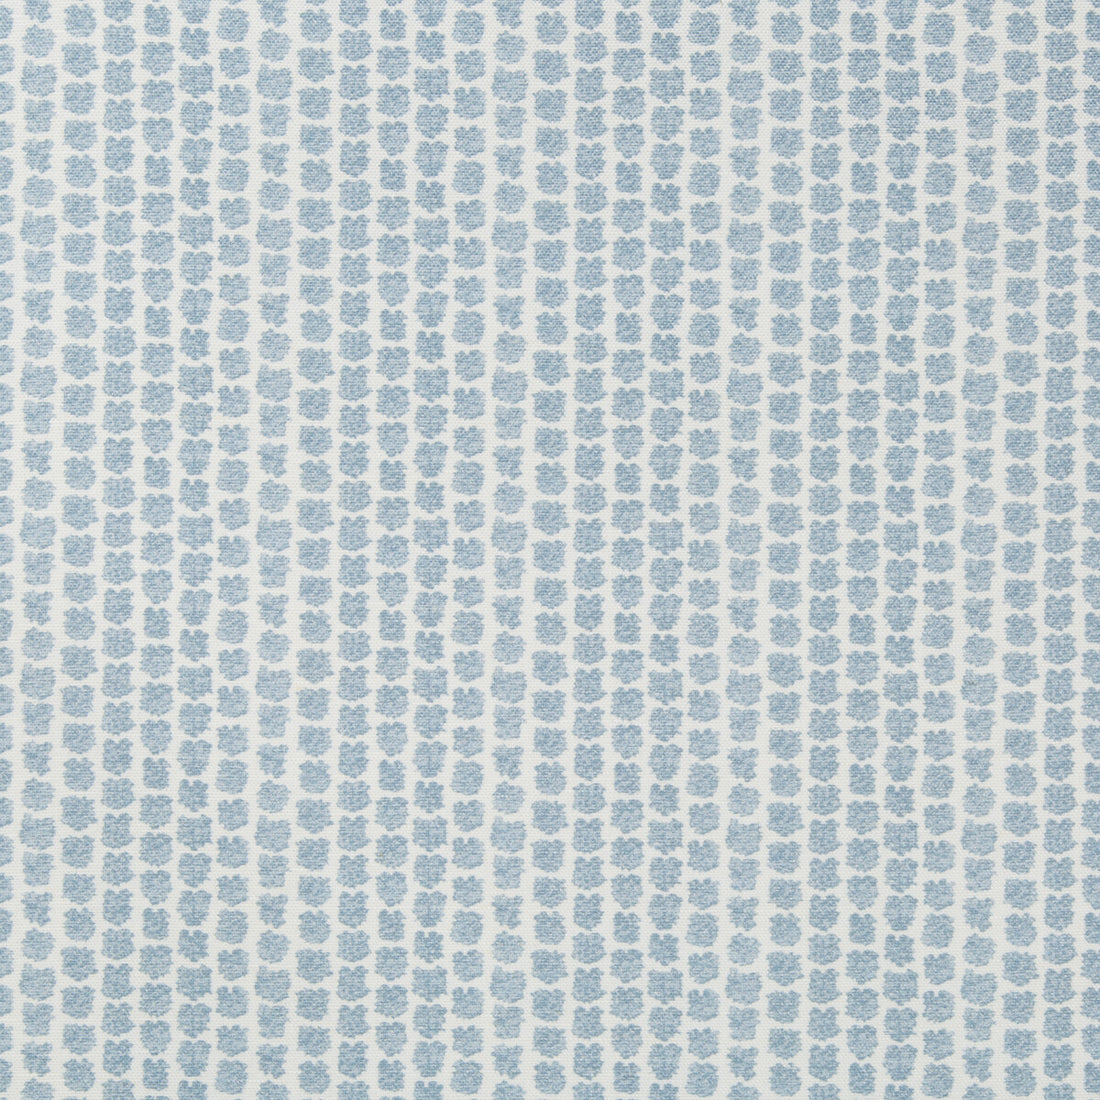 Kaya II fabric in sky color - pattern 2017224.15.0 - by Lee Jofa in the Westport collection